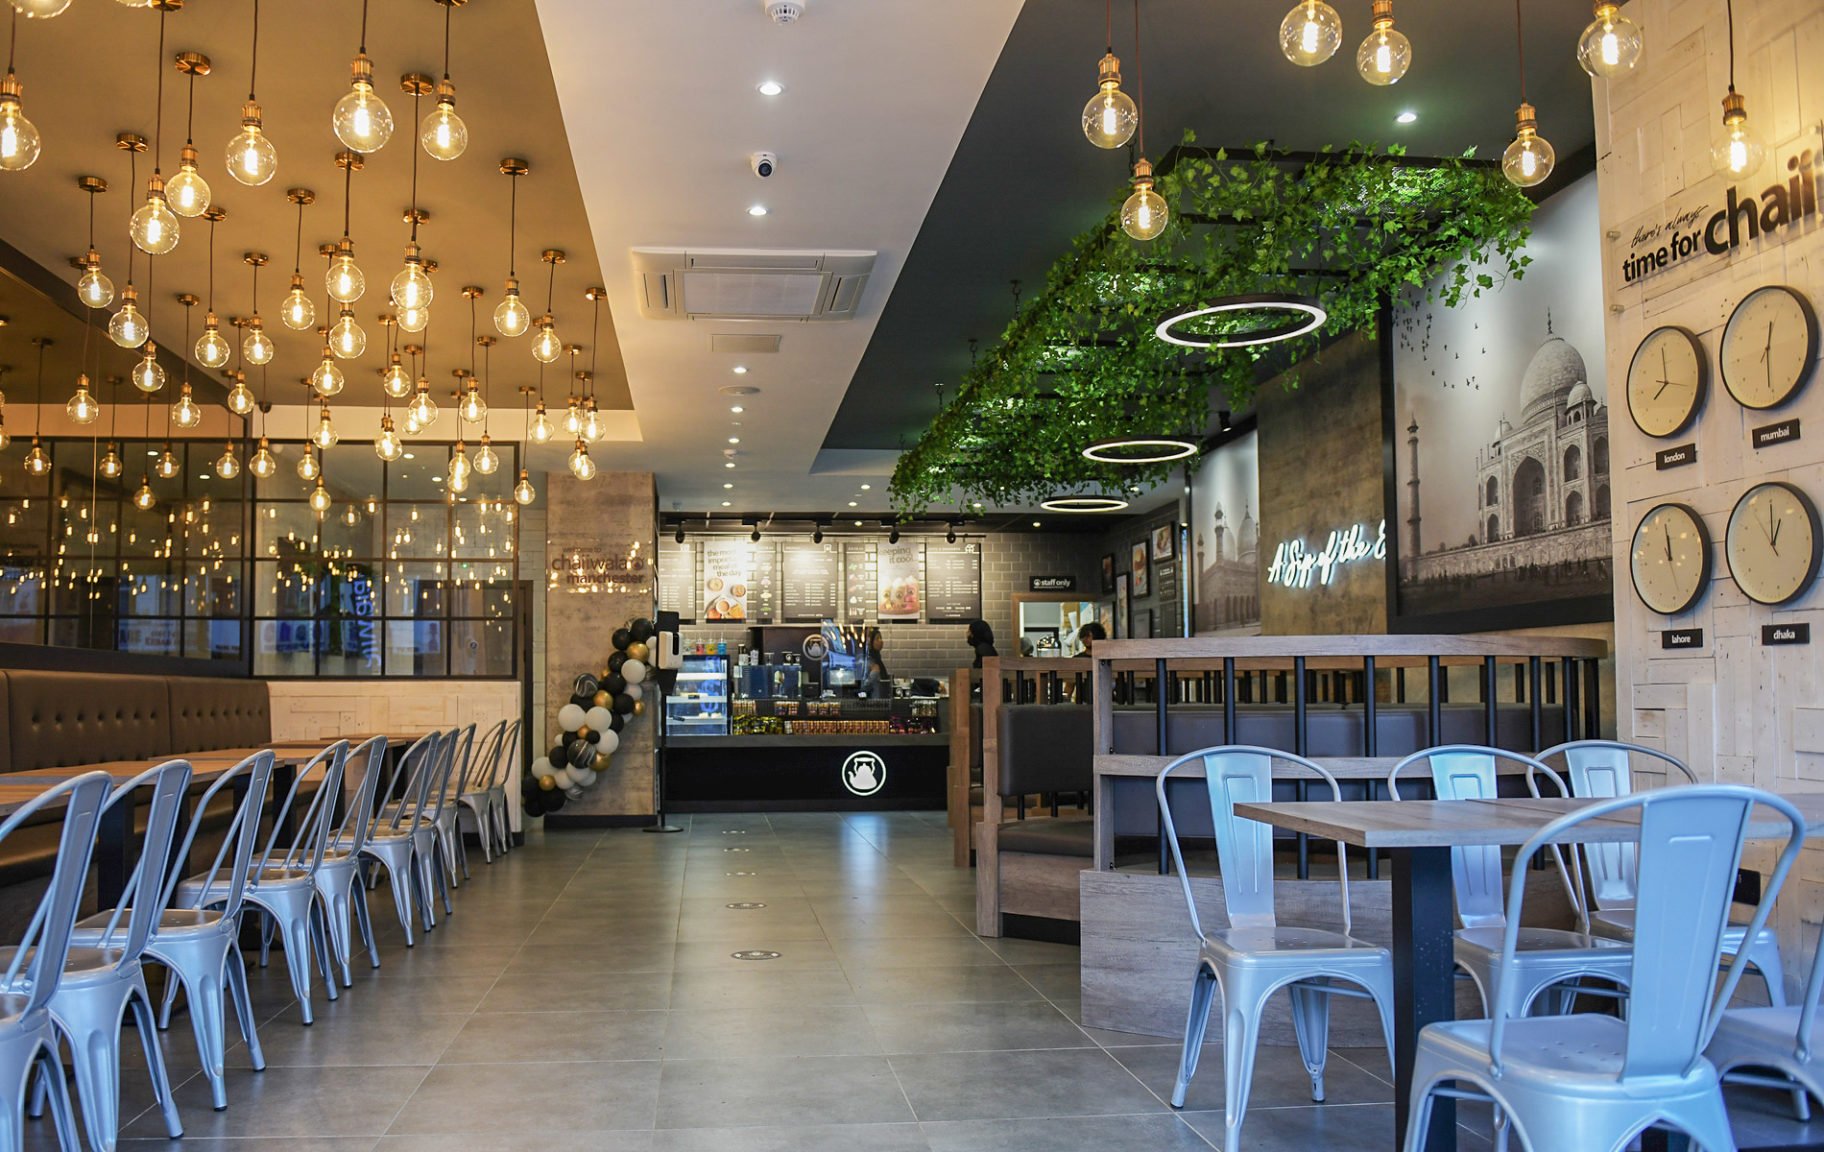 Chaiiwala Cafe, Manchester - Restaurant Interior Design on Love That Design